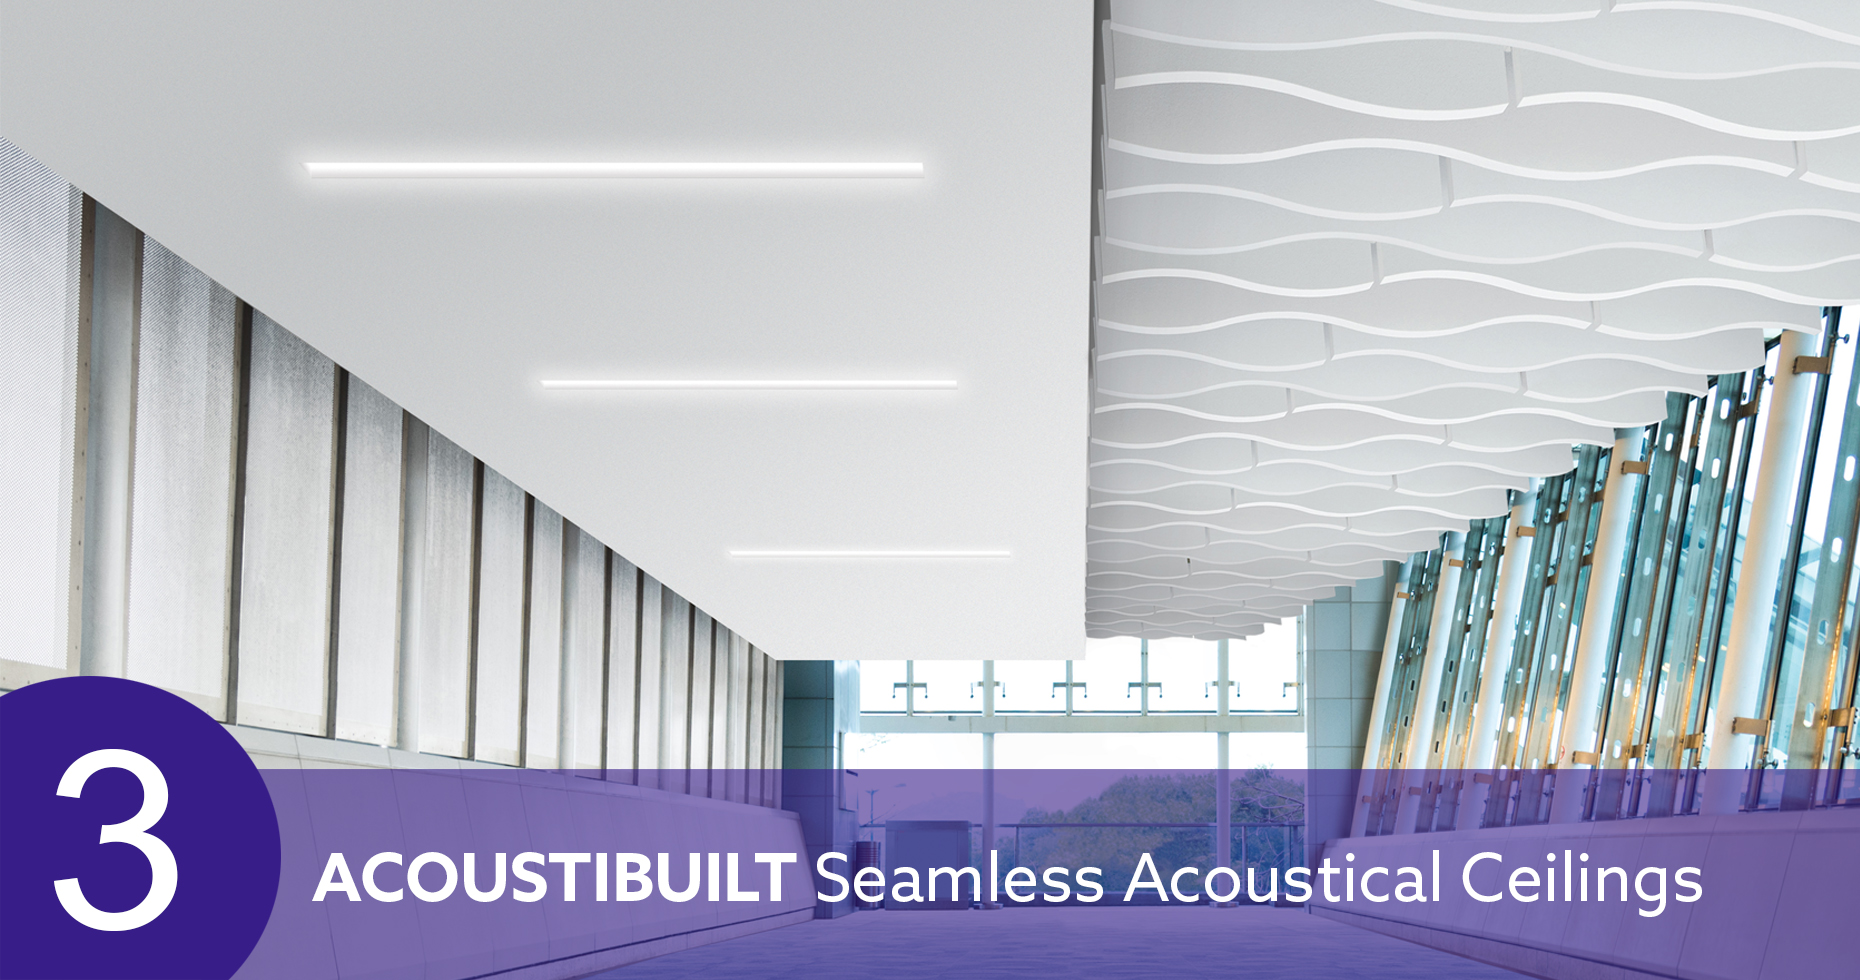 ACOUSTIBUILT Seamless Acoustical Ceiling Systems 